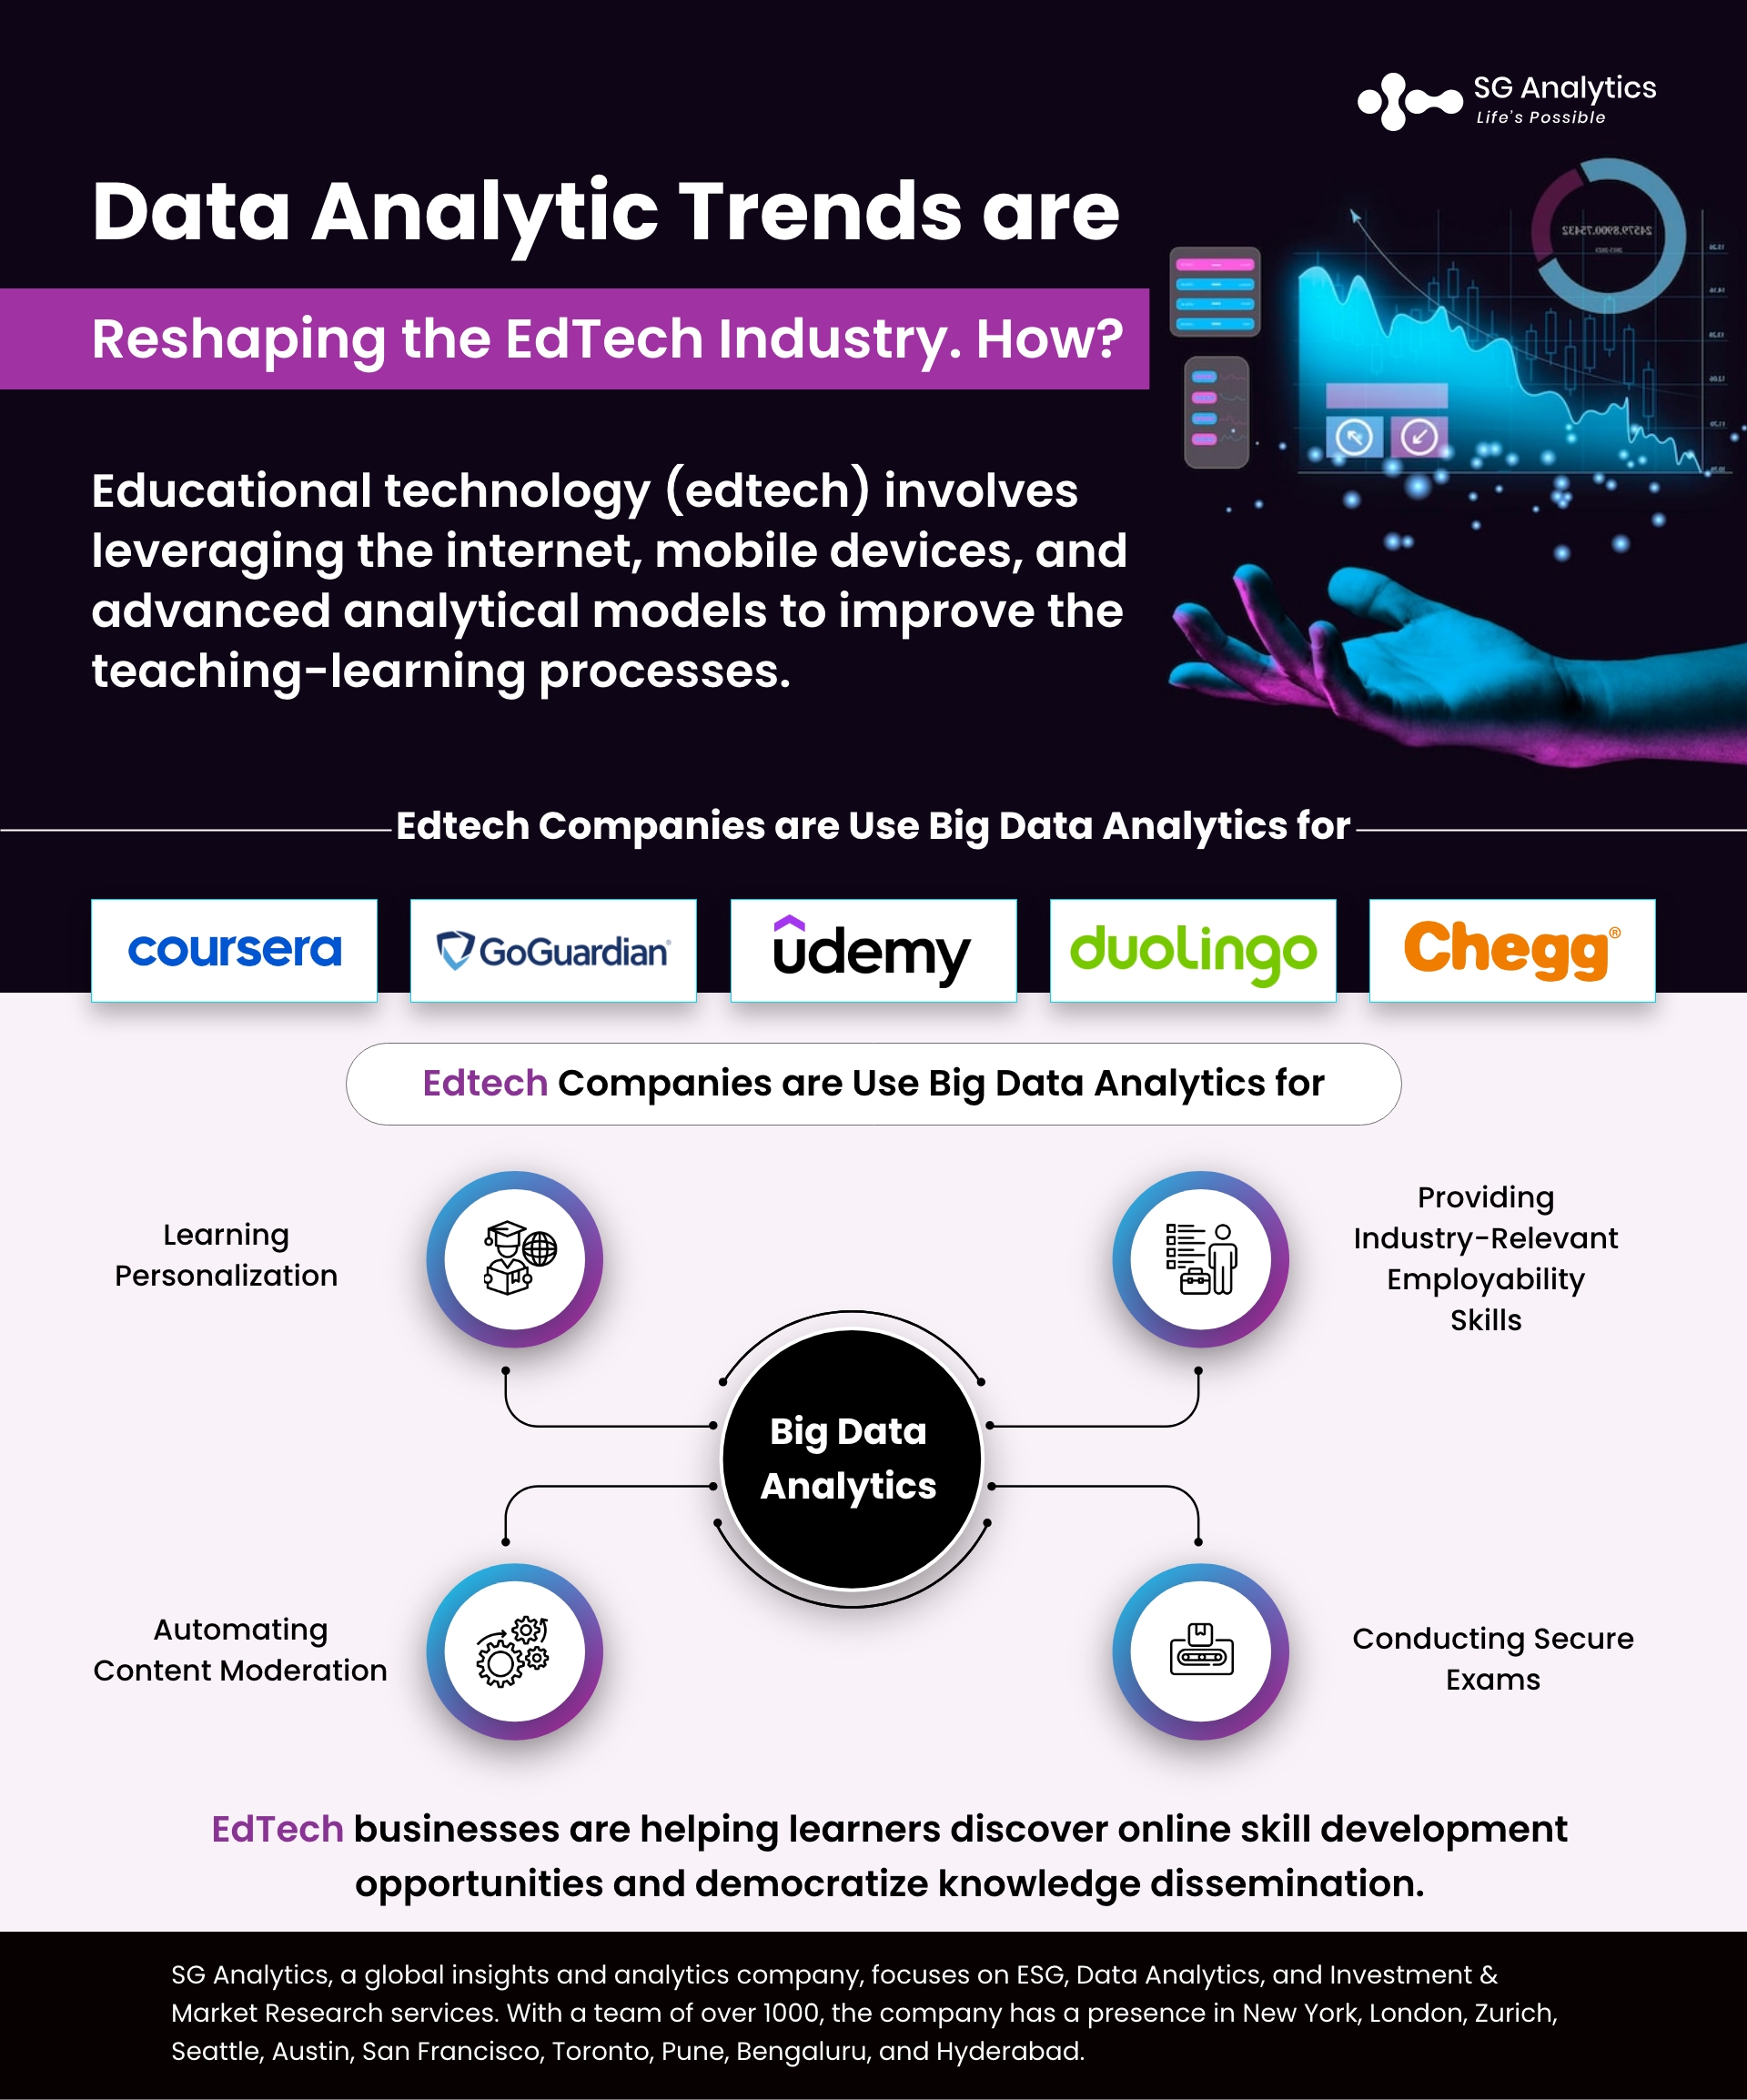 Big Data Analytics shaping EdTech Industry